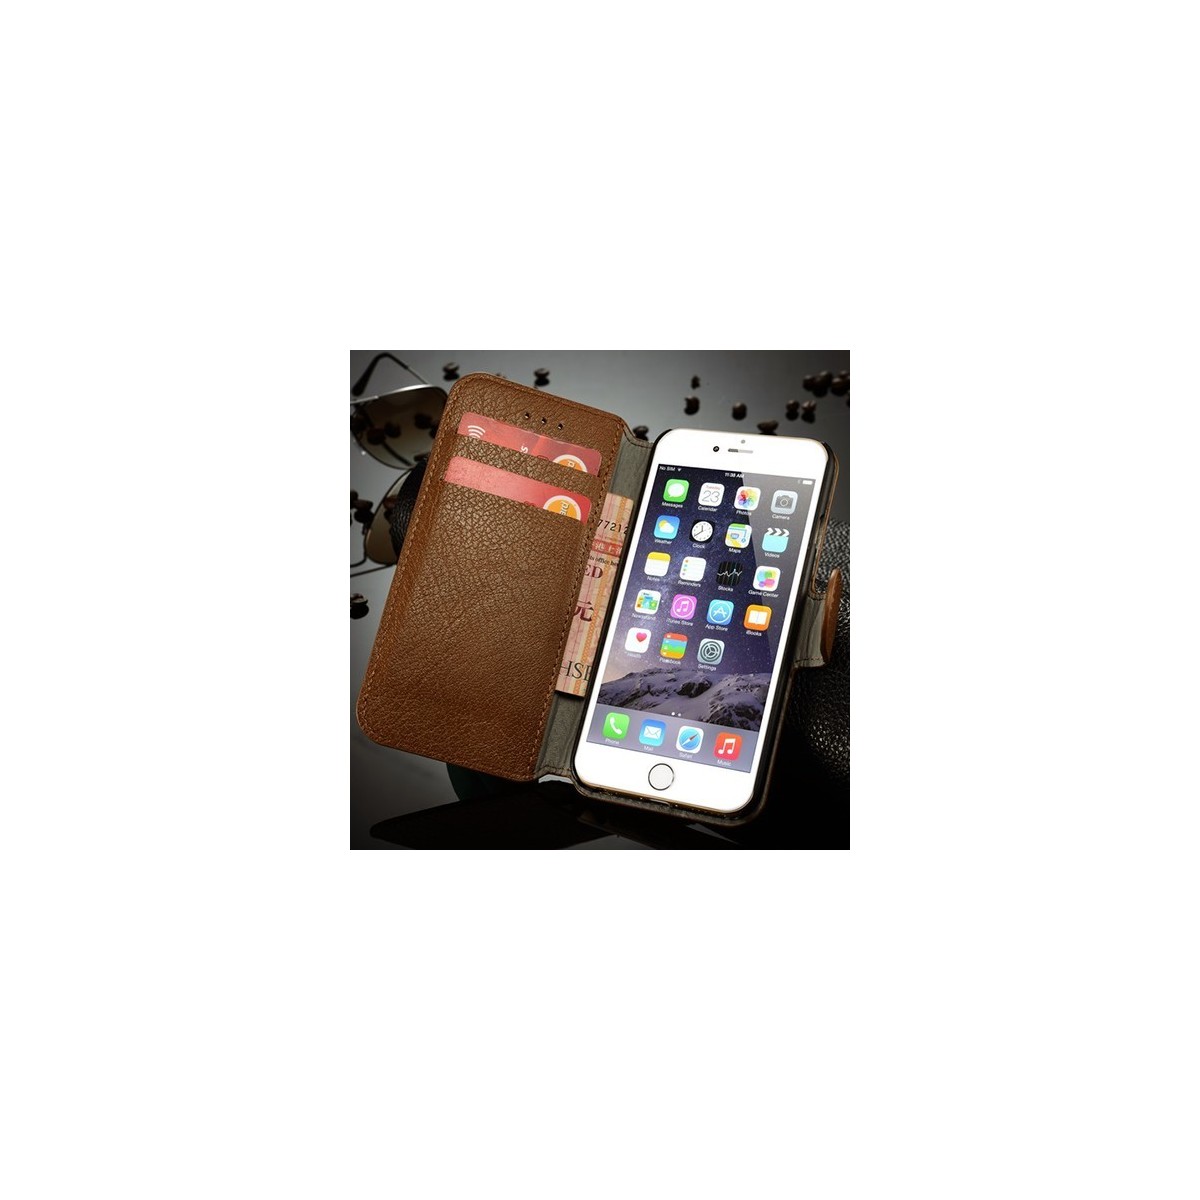 Etui Book type marron foncé pour iPhone 6 Plus - CaseMe